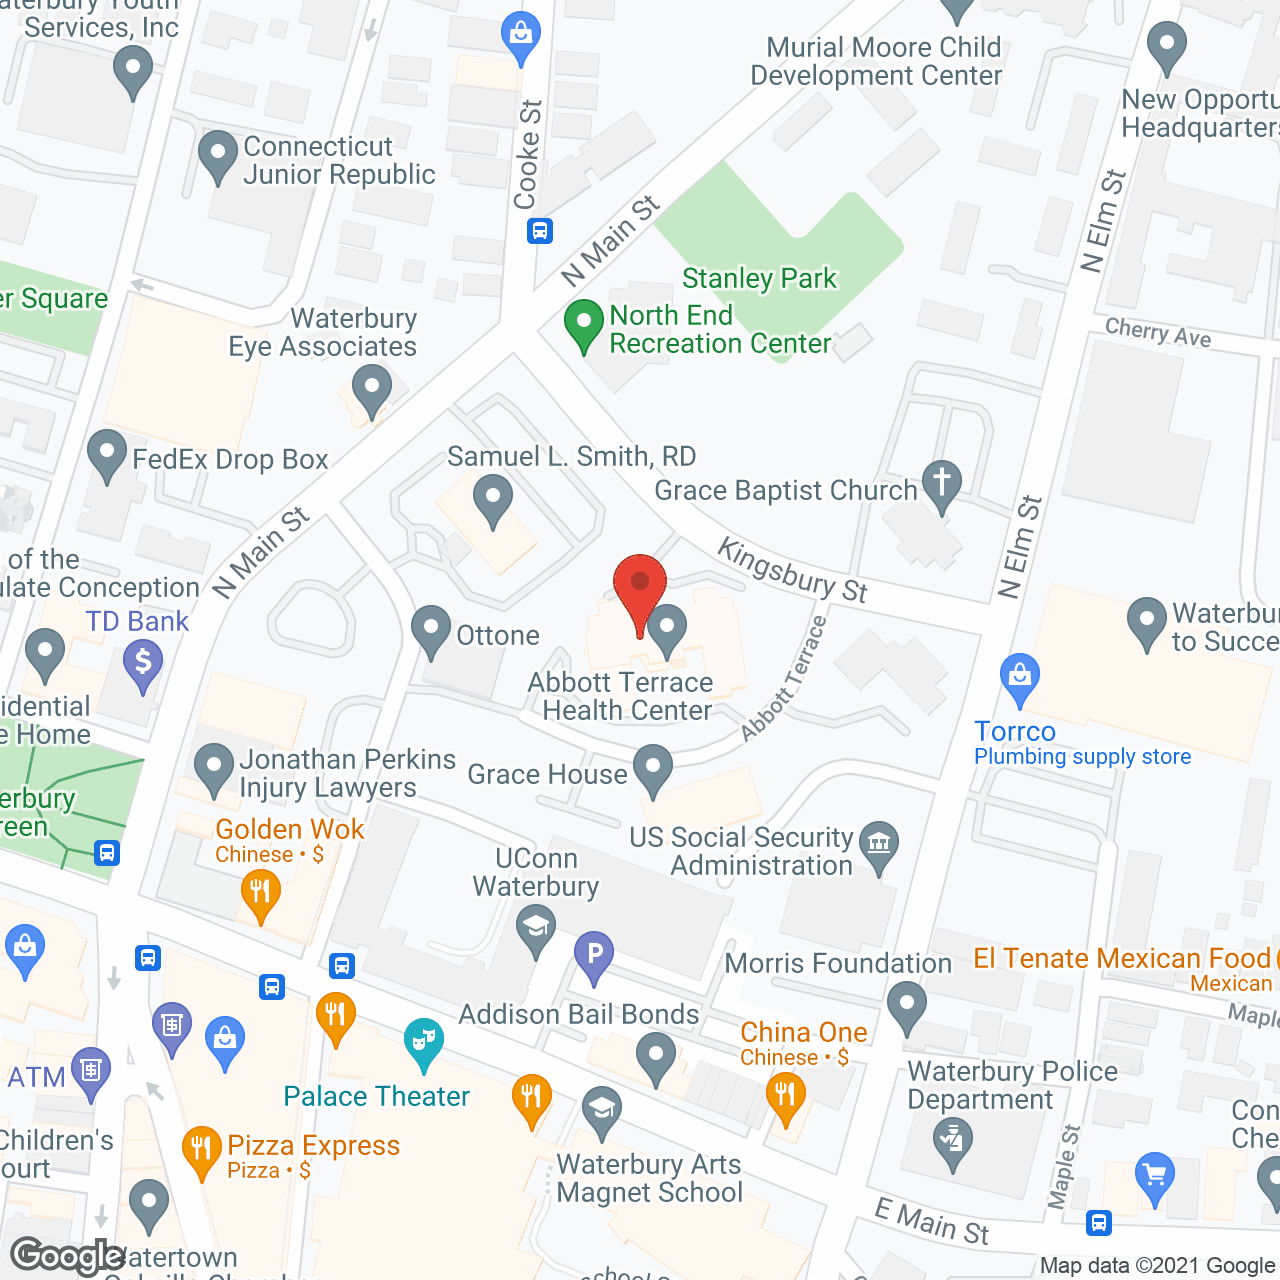 Abbott Terrace Adult Day Ctr in google map